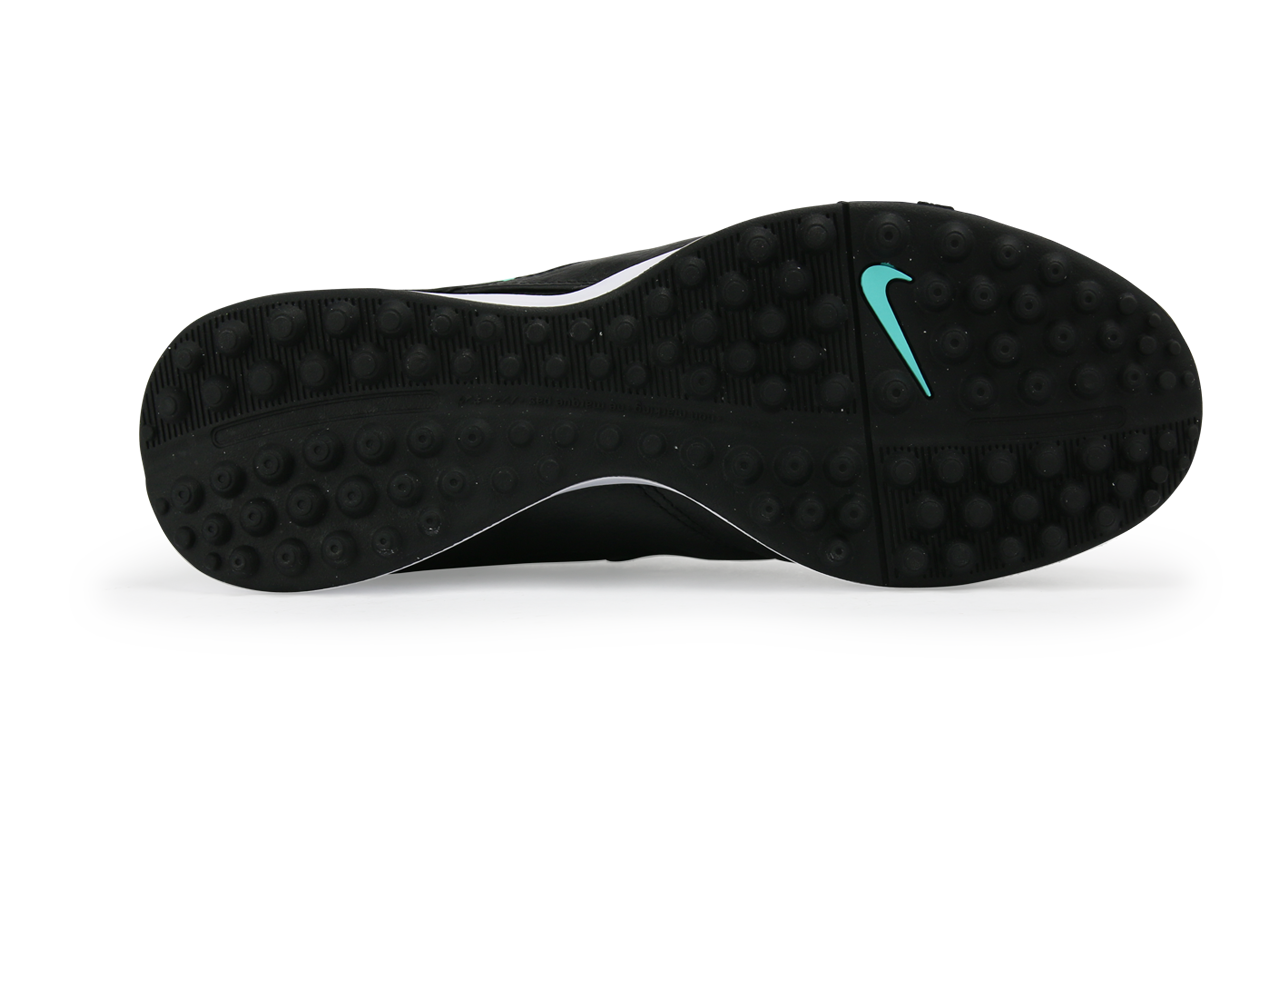 Nike Men's TiempoX Genio II Leather Turf Soccer Shoes Black/Hyper Turqouise